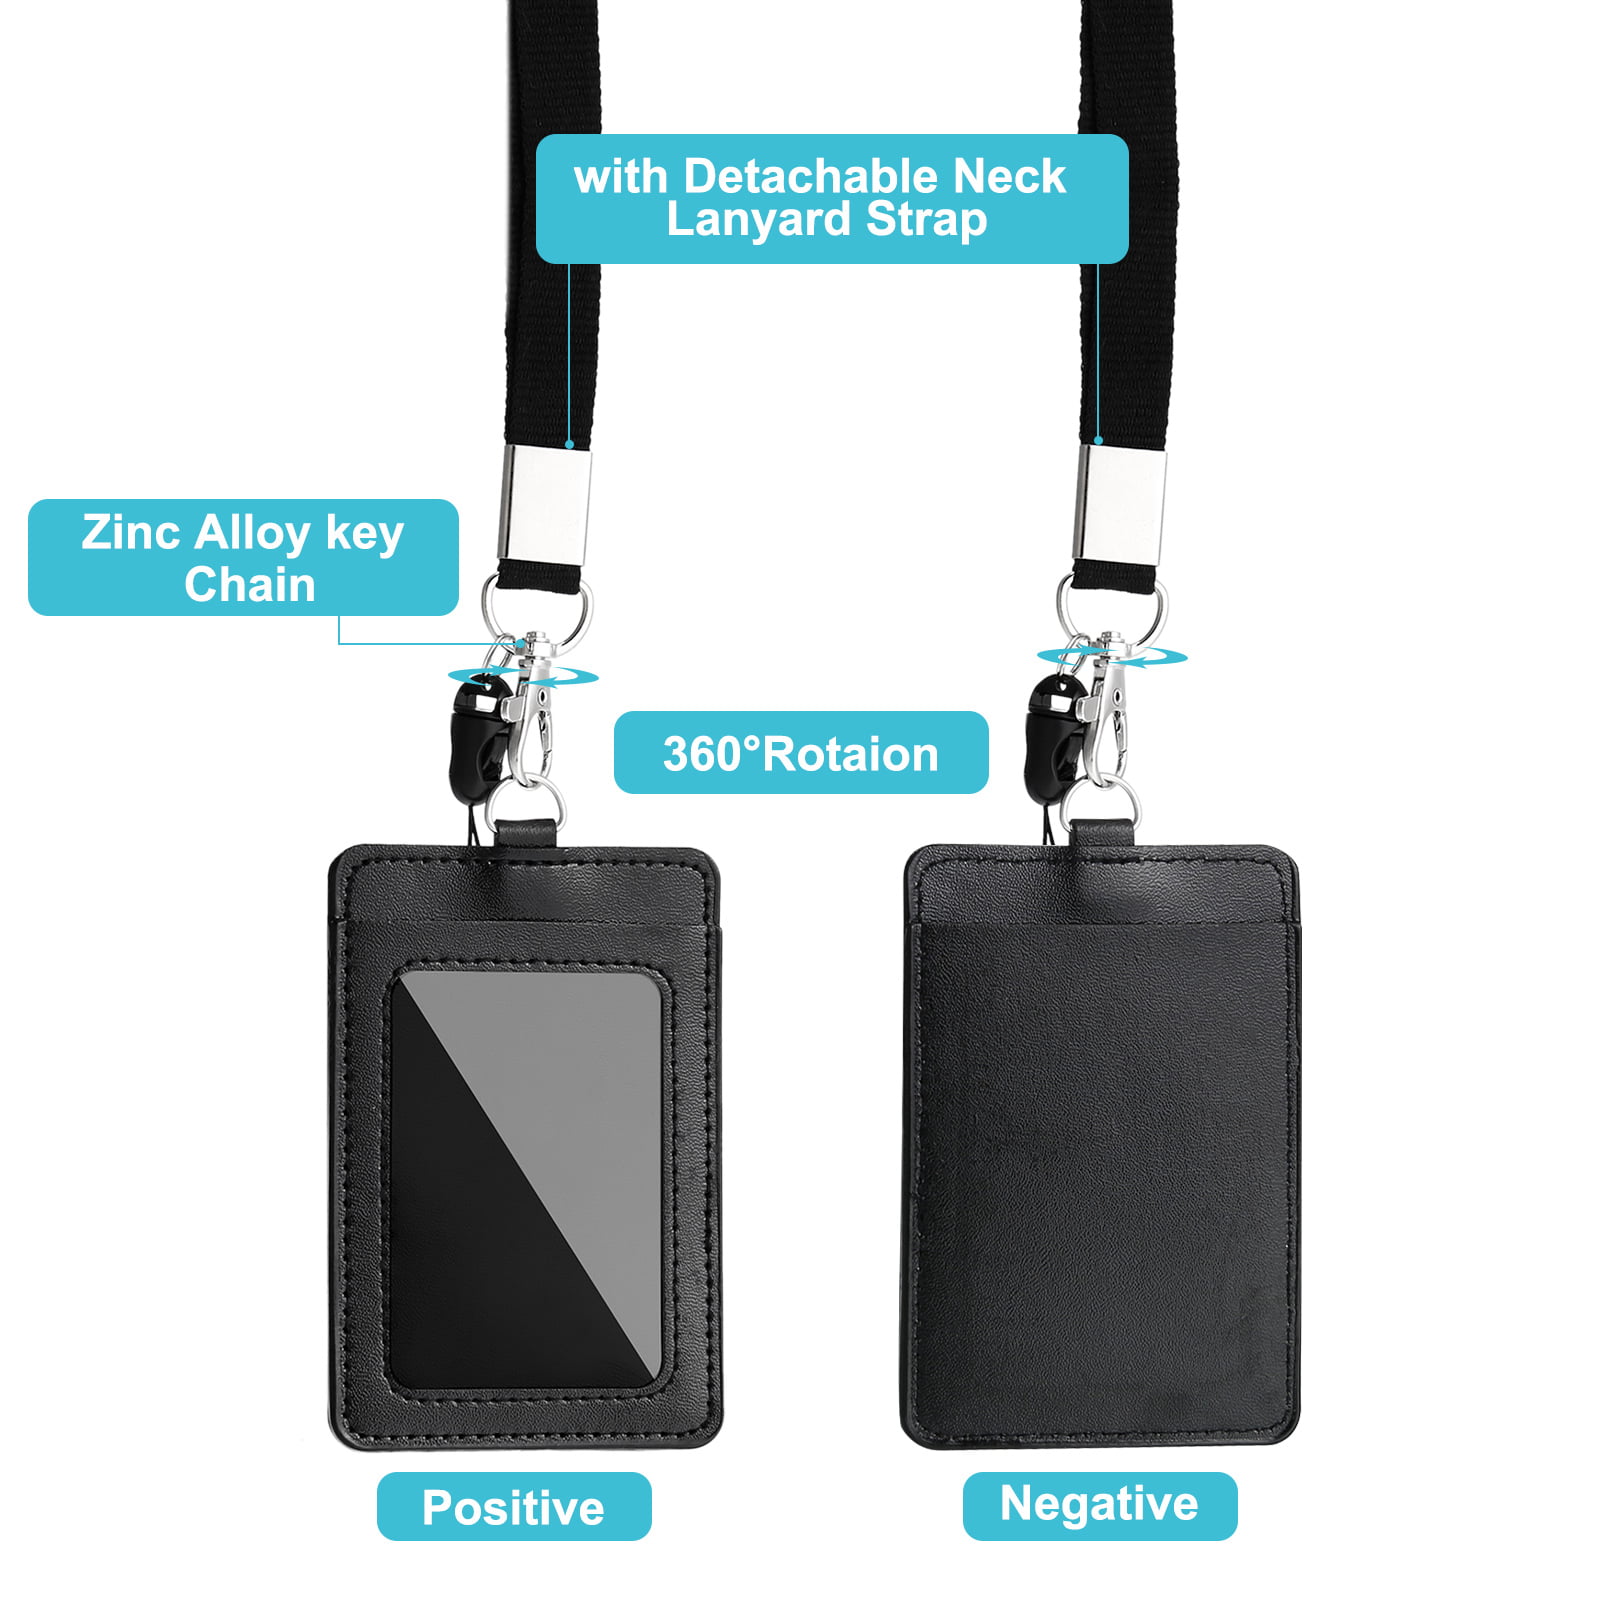 ZANQU 2 Pack Badge Holders, Detachable Neck Strap and Retractable Badge Reel Lanyard with Waterproof ID Card Holder Set (Horizontal 2 Pack, Black)